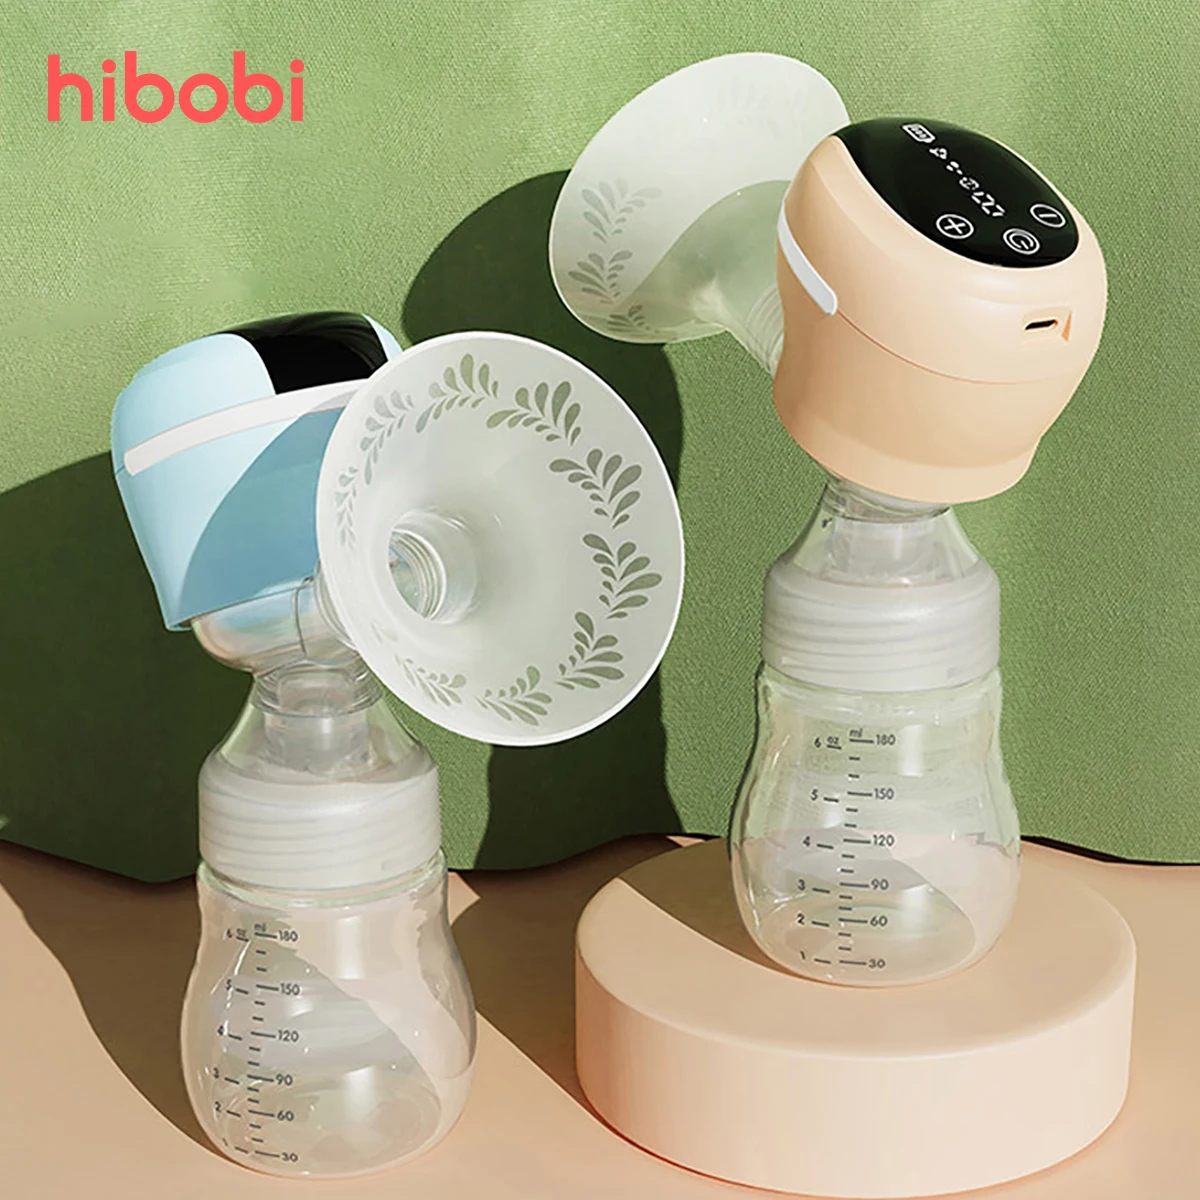 hibobi Electric Breast Pump LED Display Hands-Free Portable Milk Extractor Silent Automatic Milker